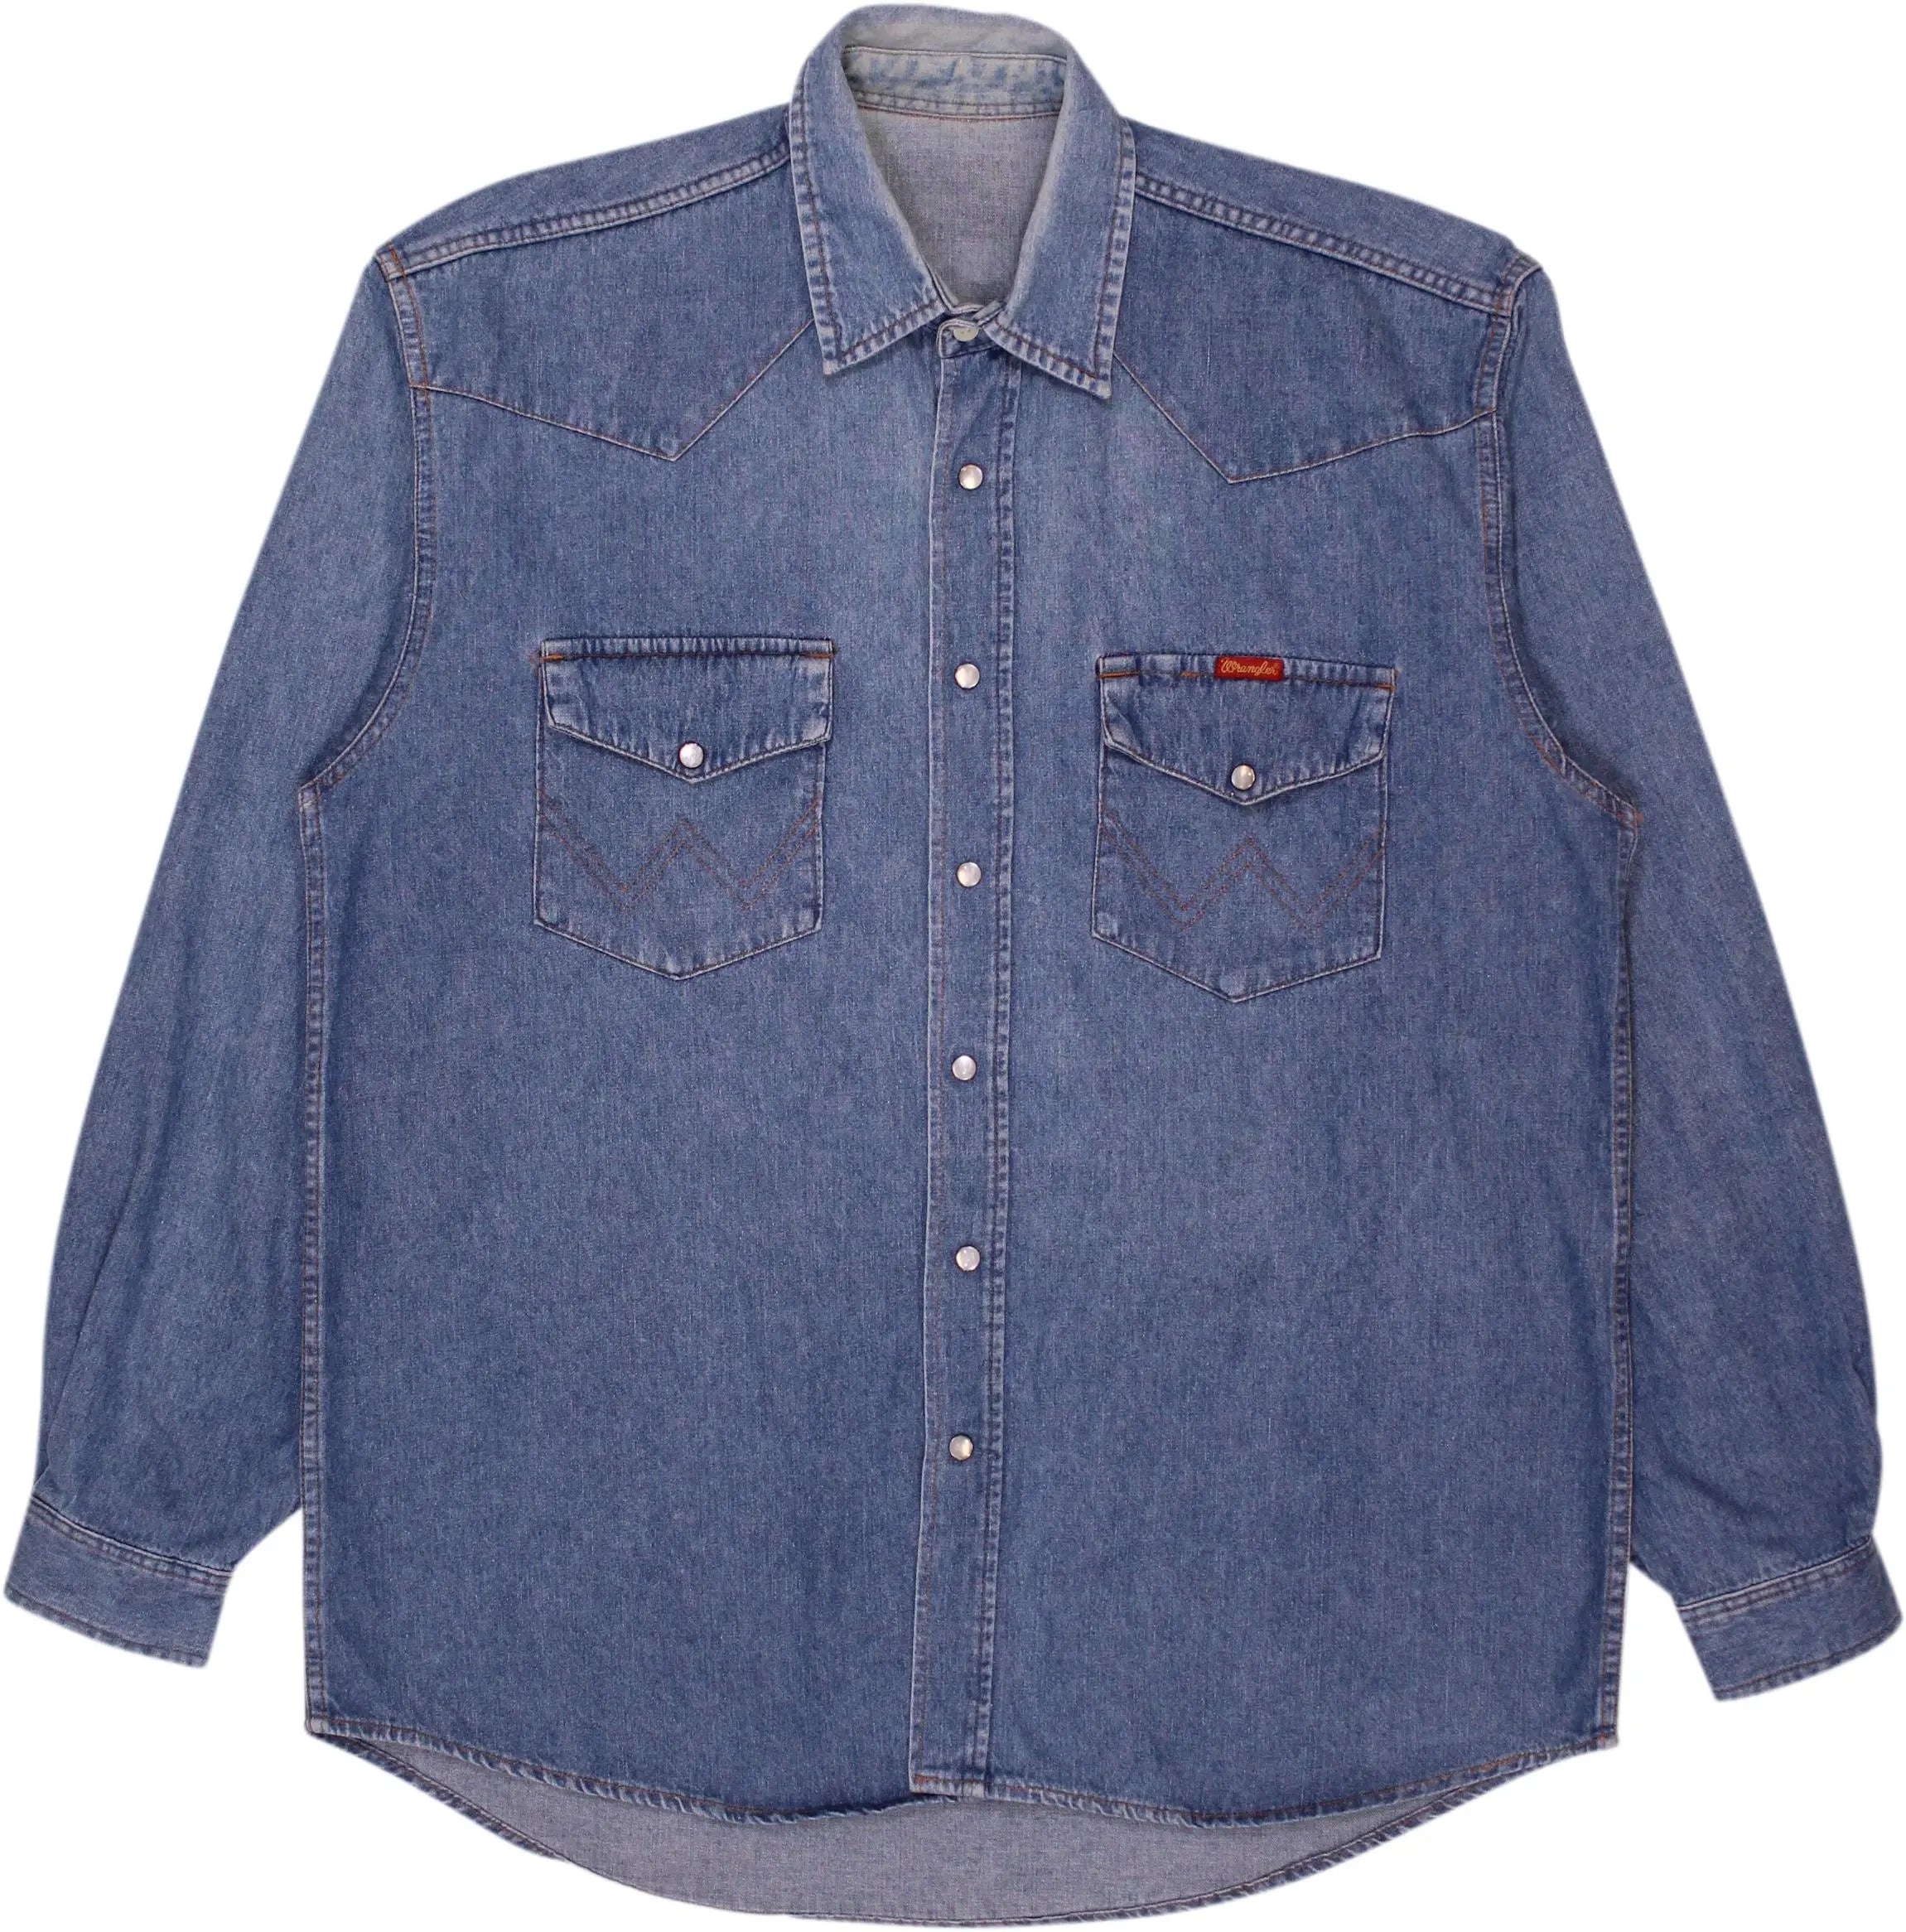 Wrangler - Wrangler Denim Shirt- ThriftTale.com - Vintage and second handclothing